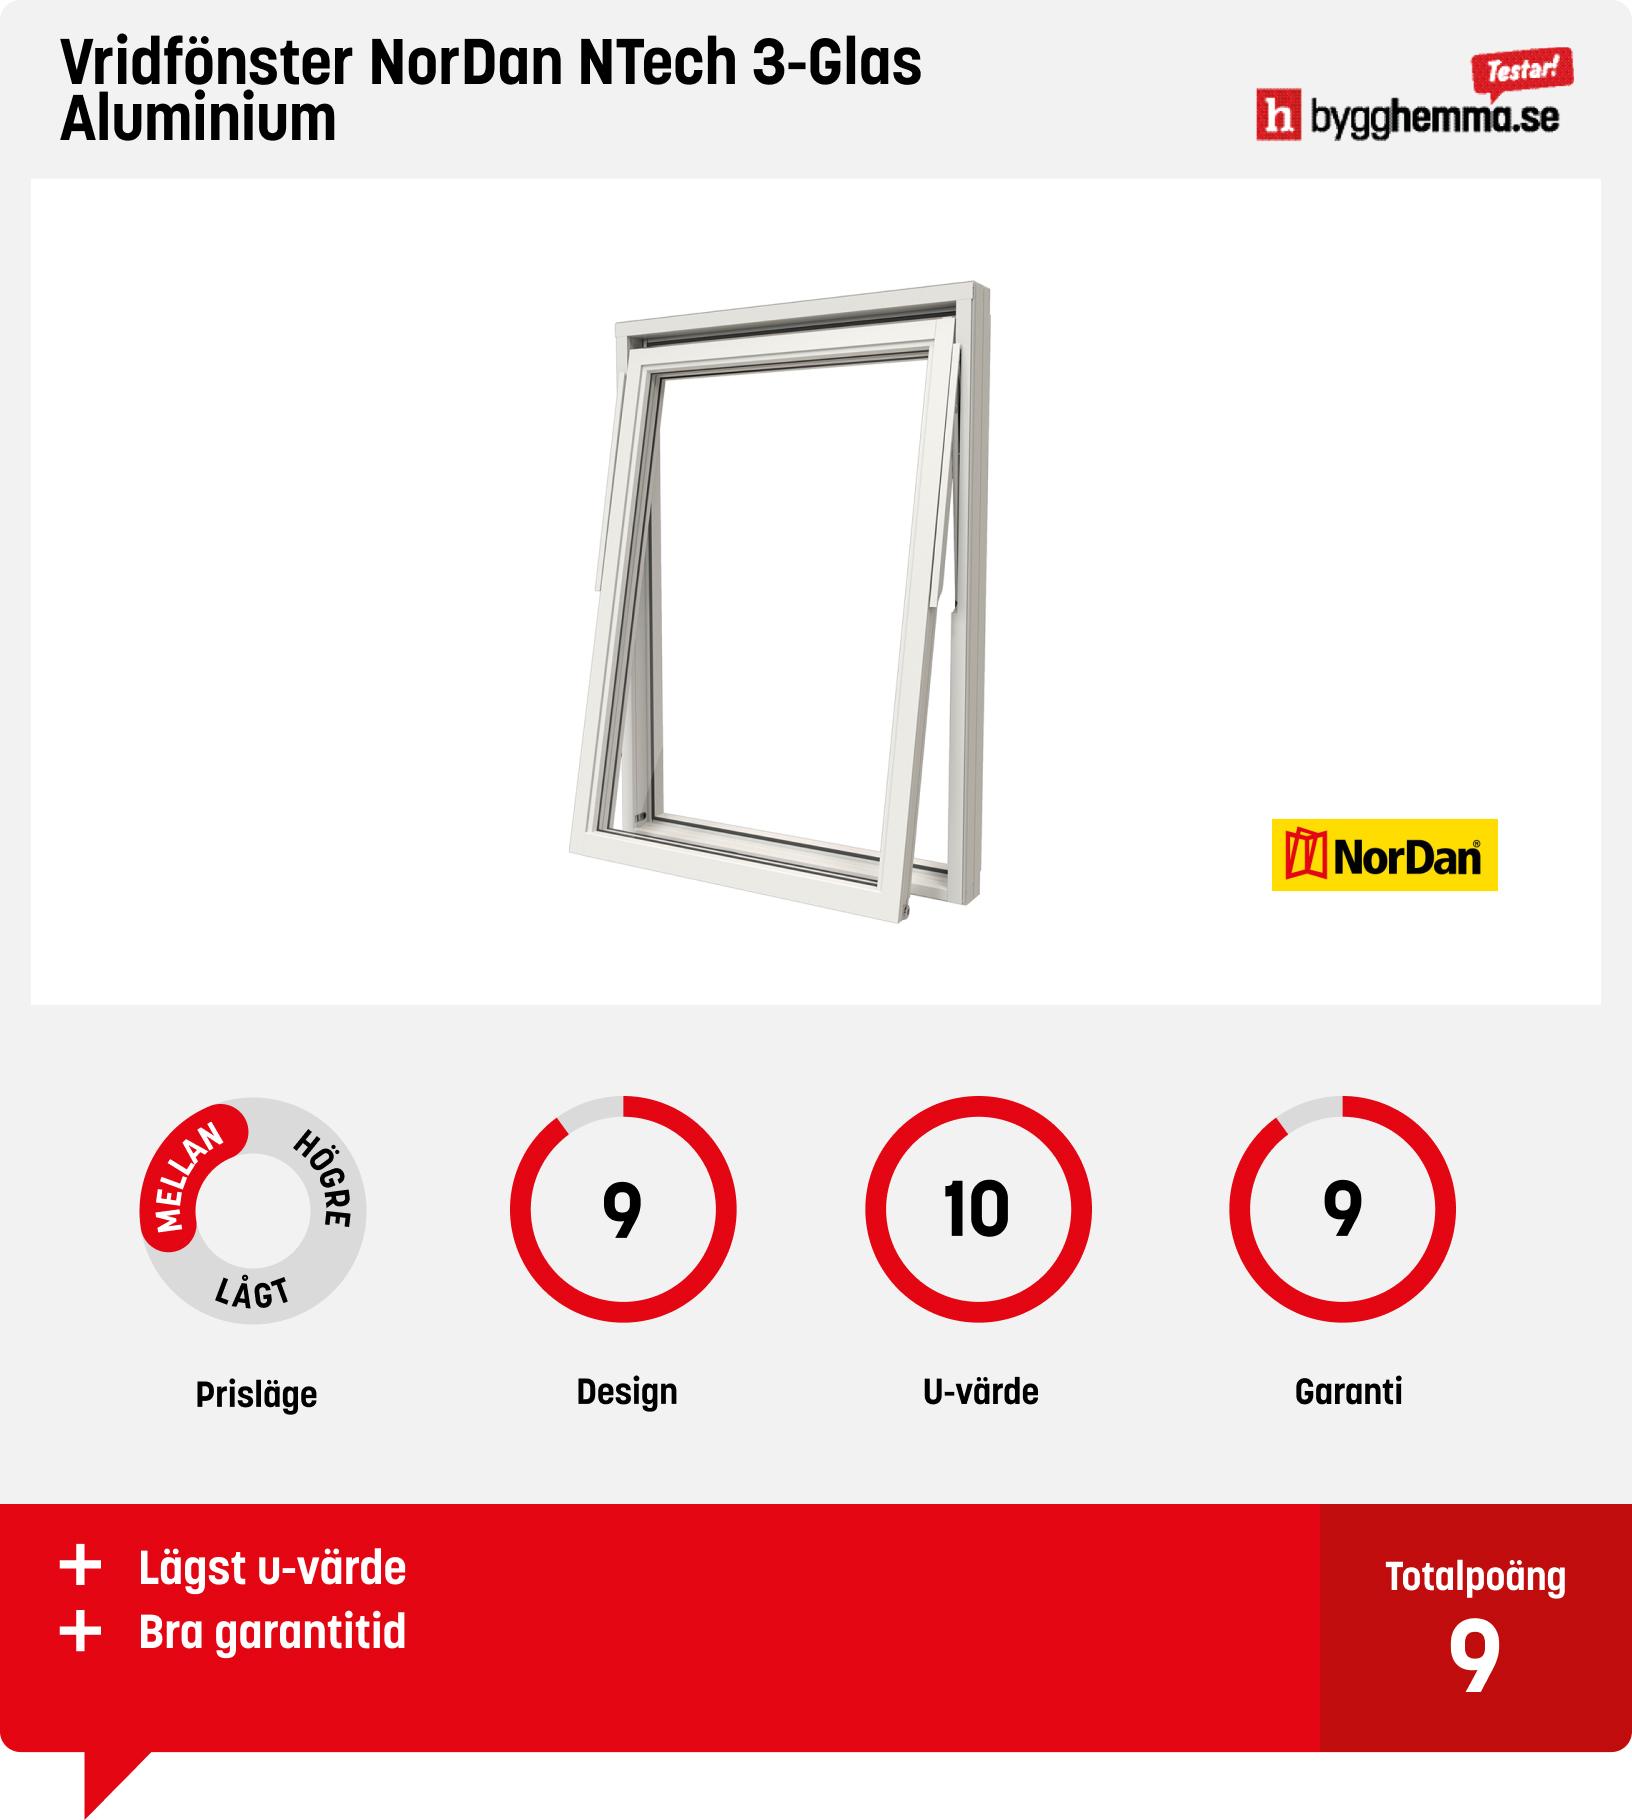 Aluminiumfönster test - Vridfönster NorDan NTech 3-Glas Aluminium